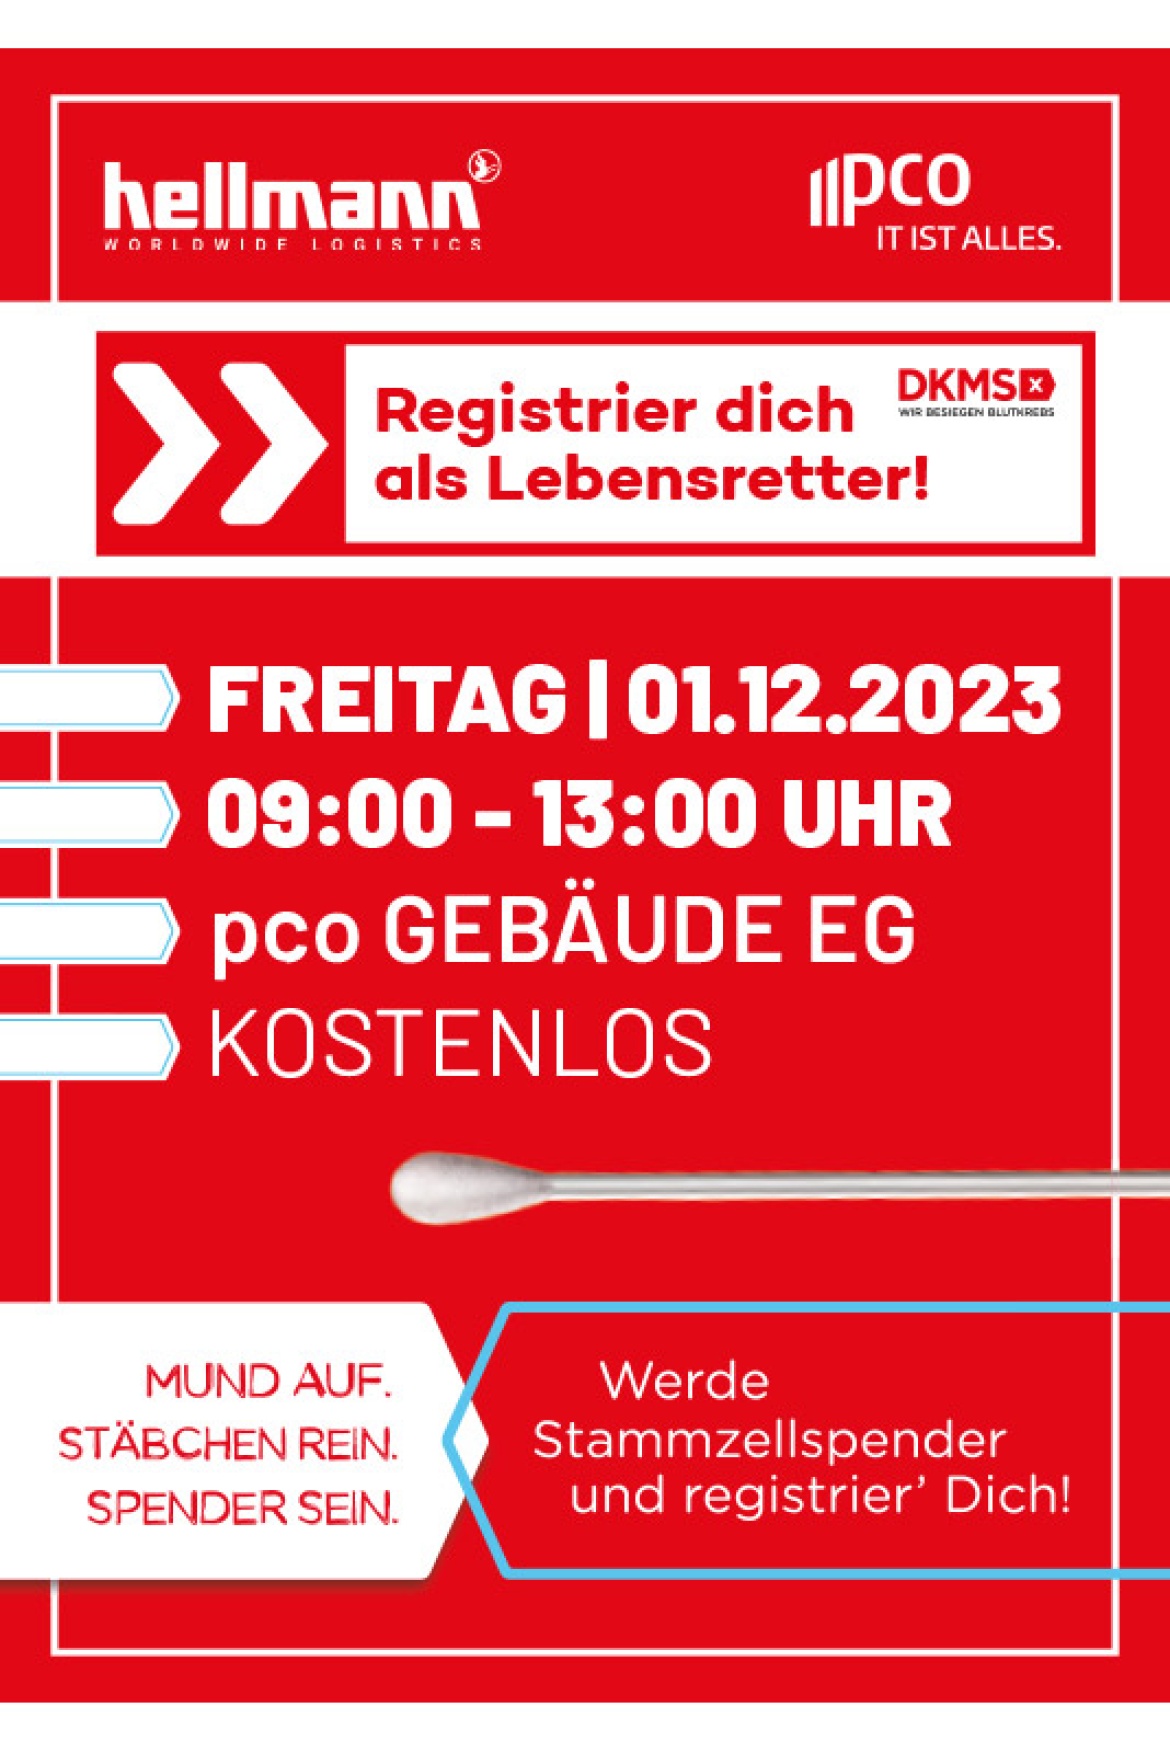 Plakat zur DKMS Aktion pco x Hellmann Worldwide Logistics